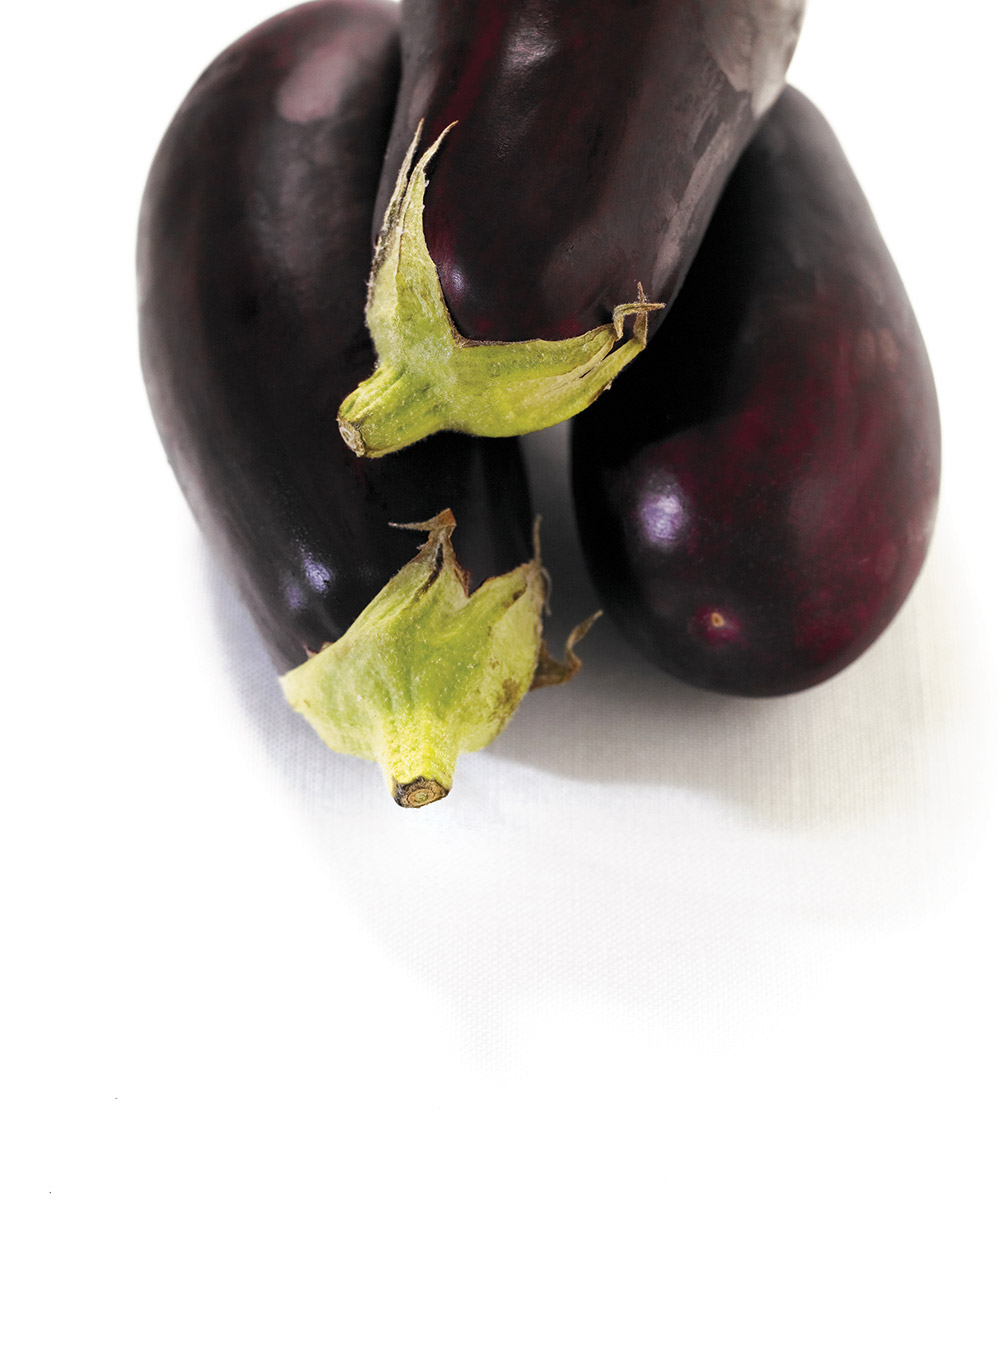 Eggplant Rolls Au Gratin